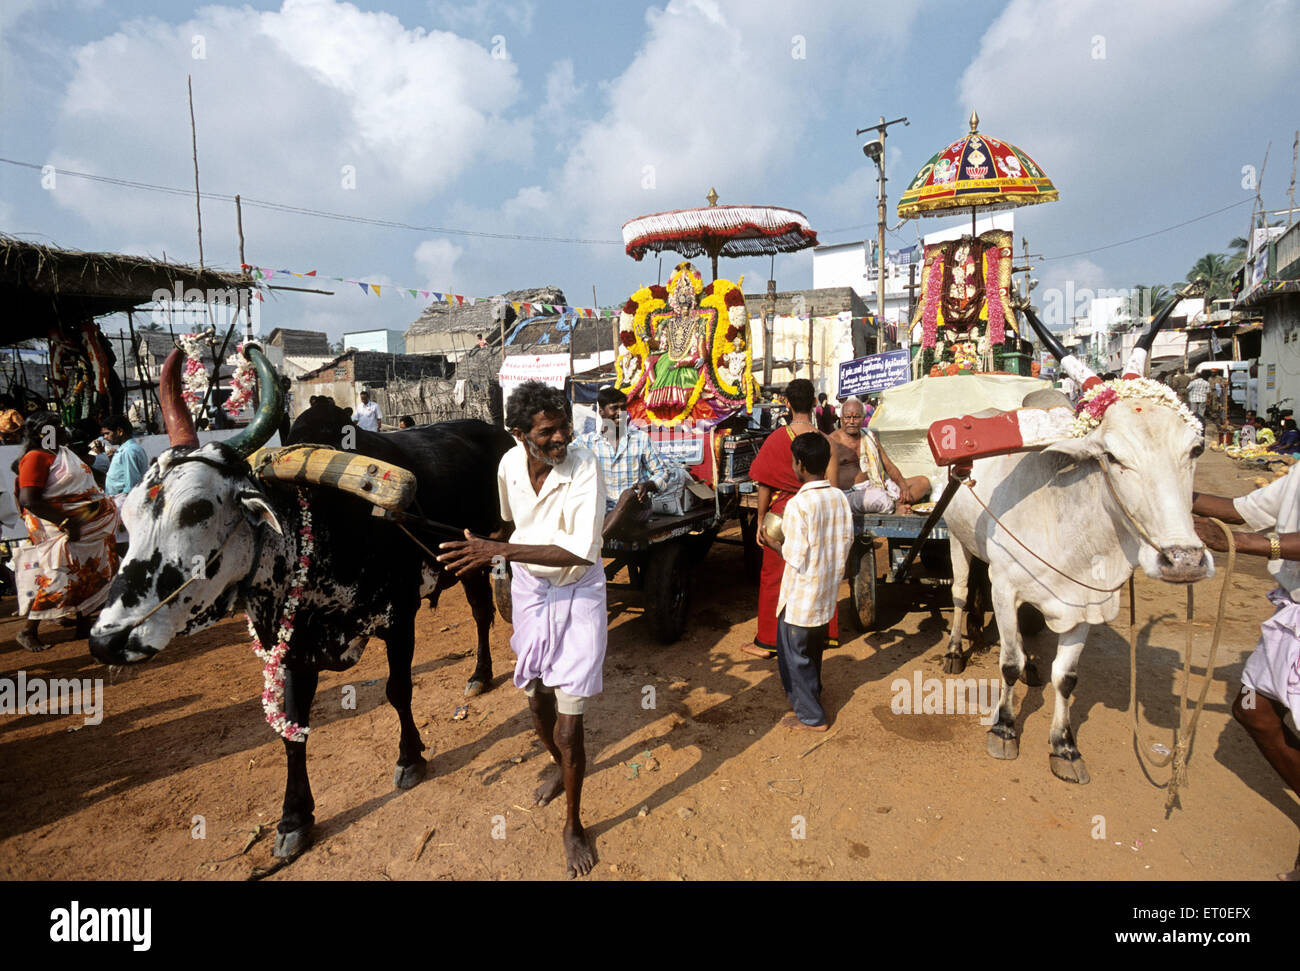 Masi magma festival en vaithi ; en Pondicherry, India NOMR Tamil Nadu ; Foto de stock